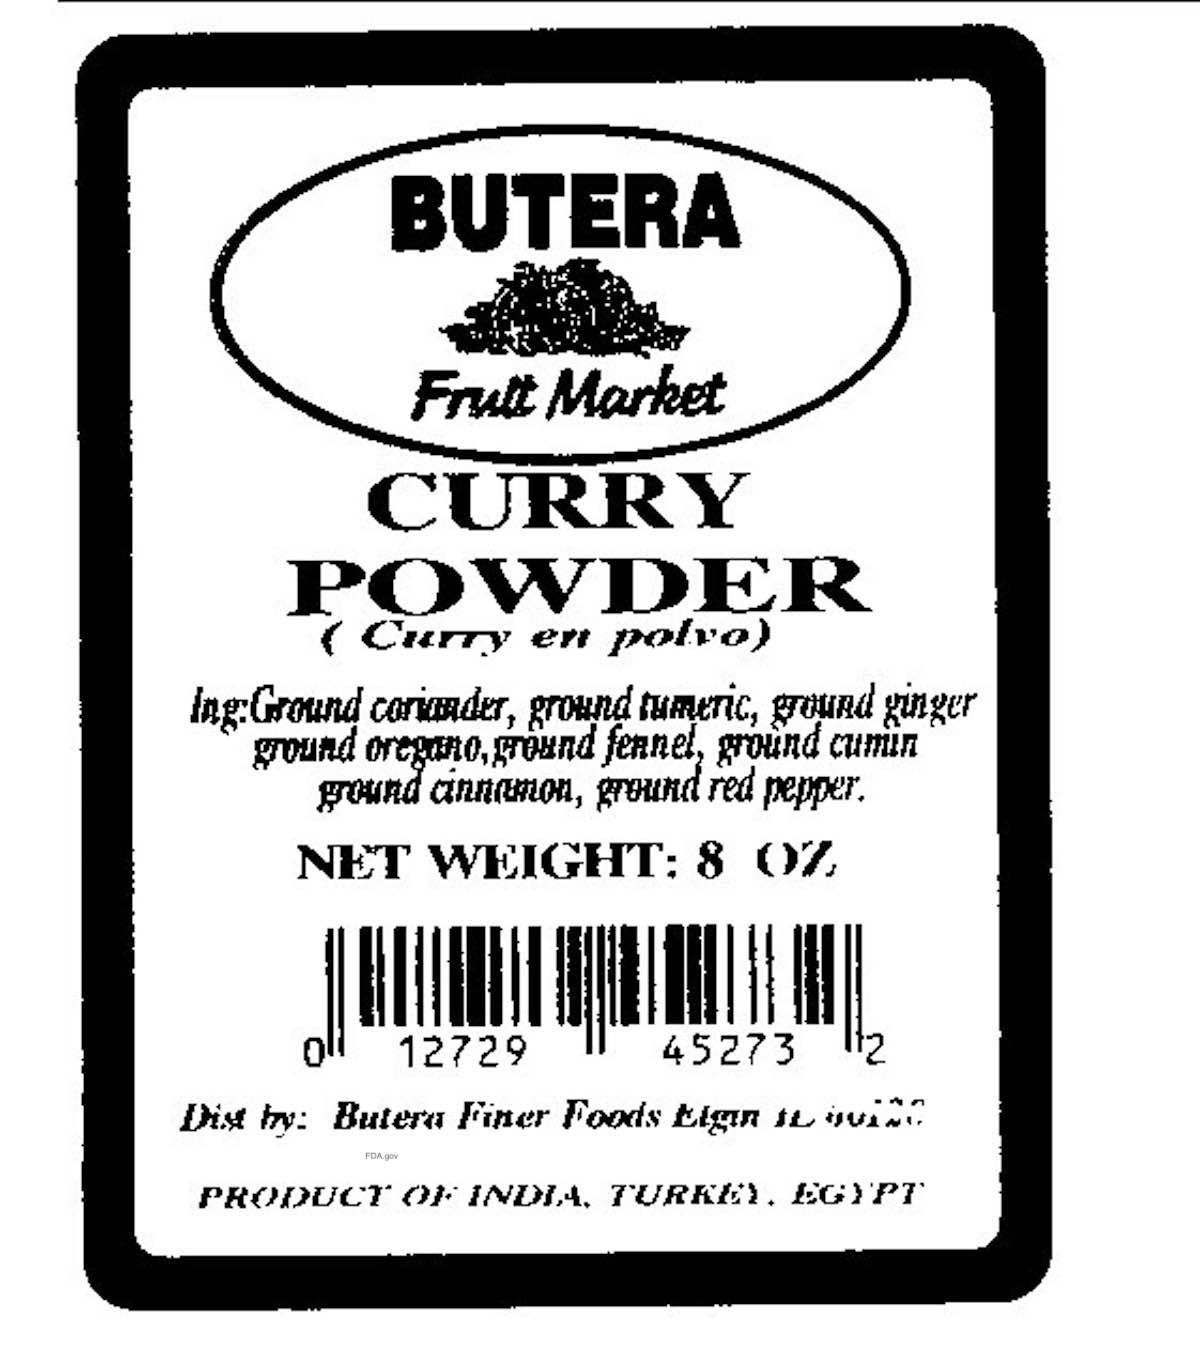 Butera Curry Powder Lead Contamination